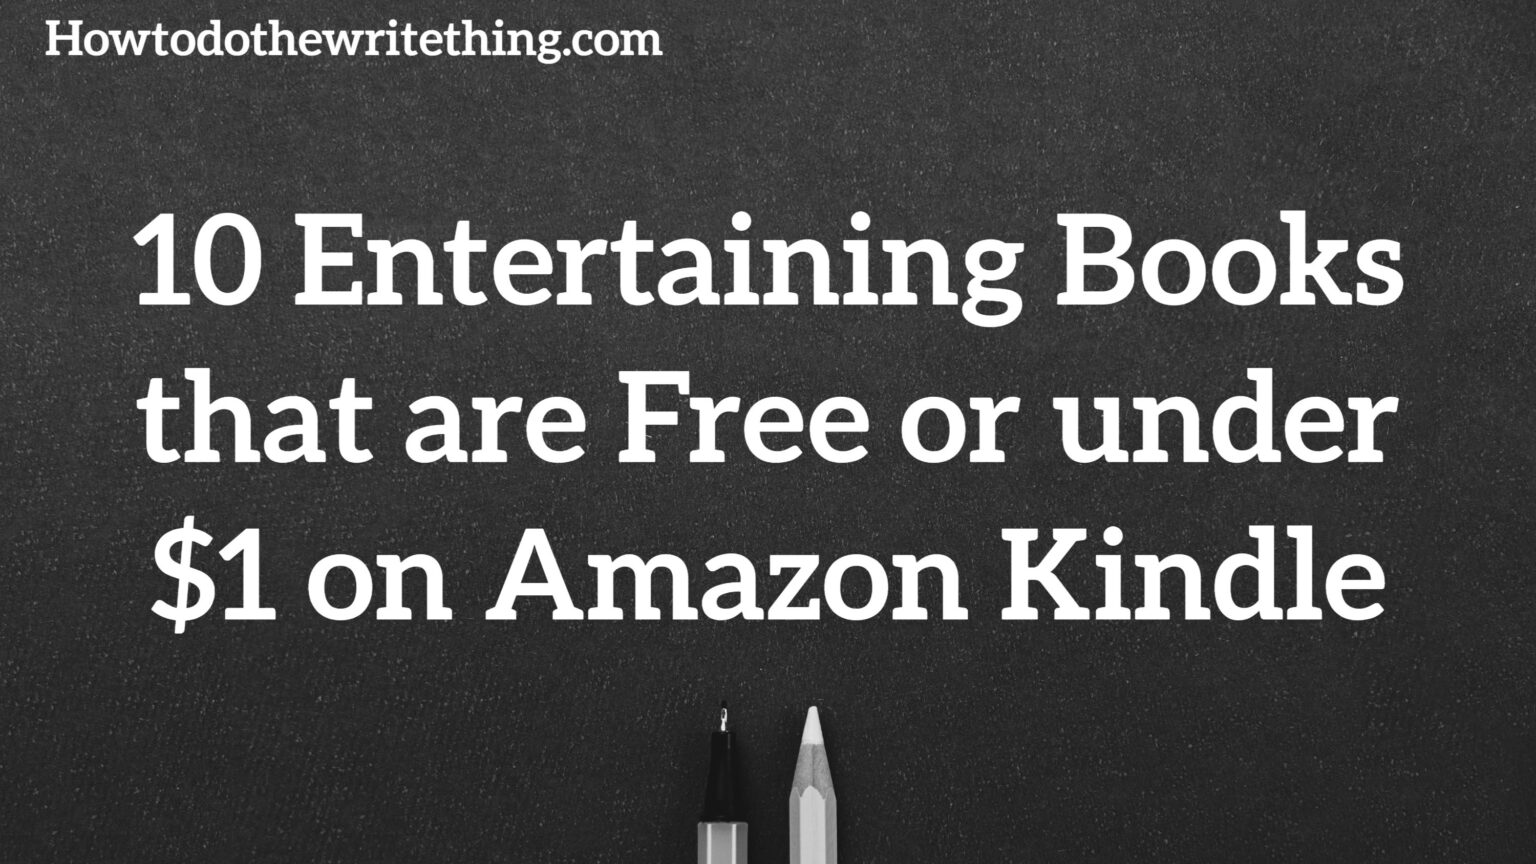 10-entertaining-books-that-are-free-on-amazon-kindle